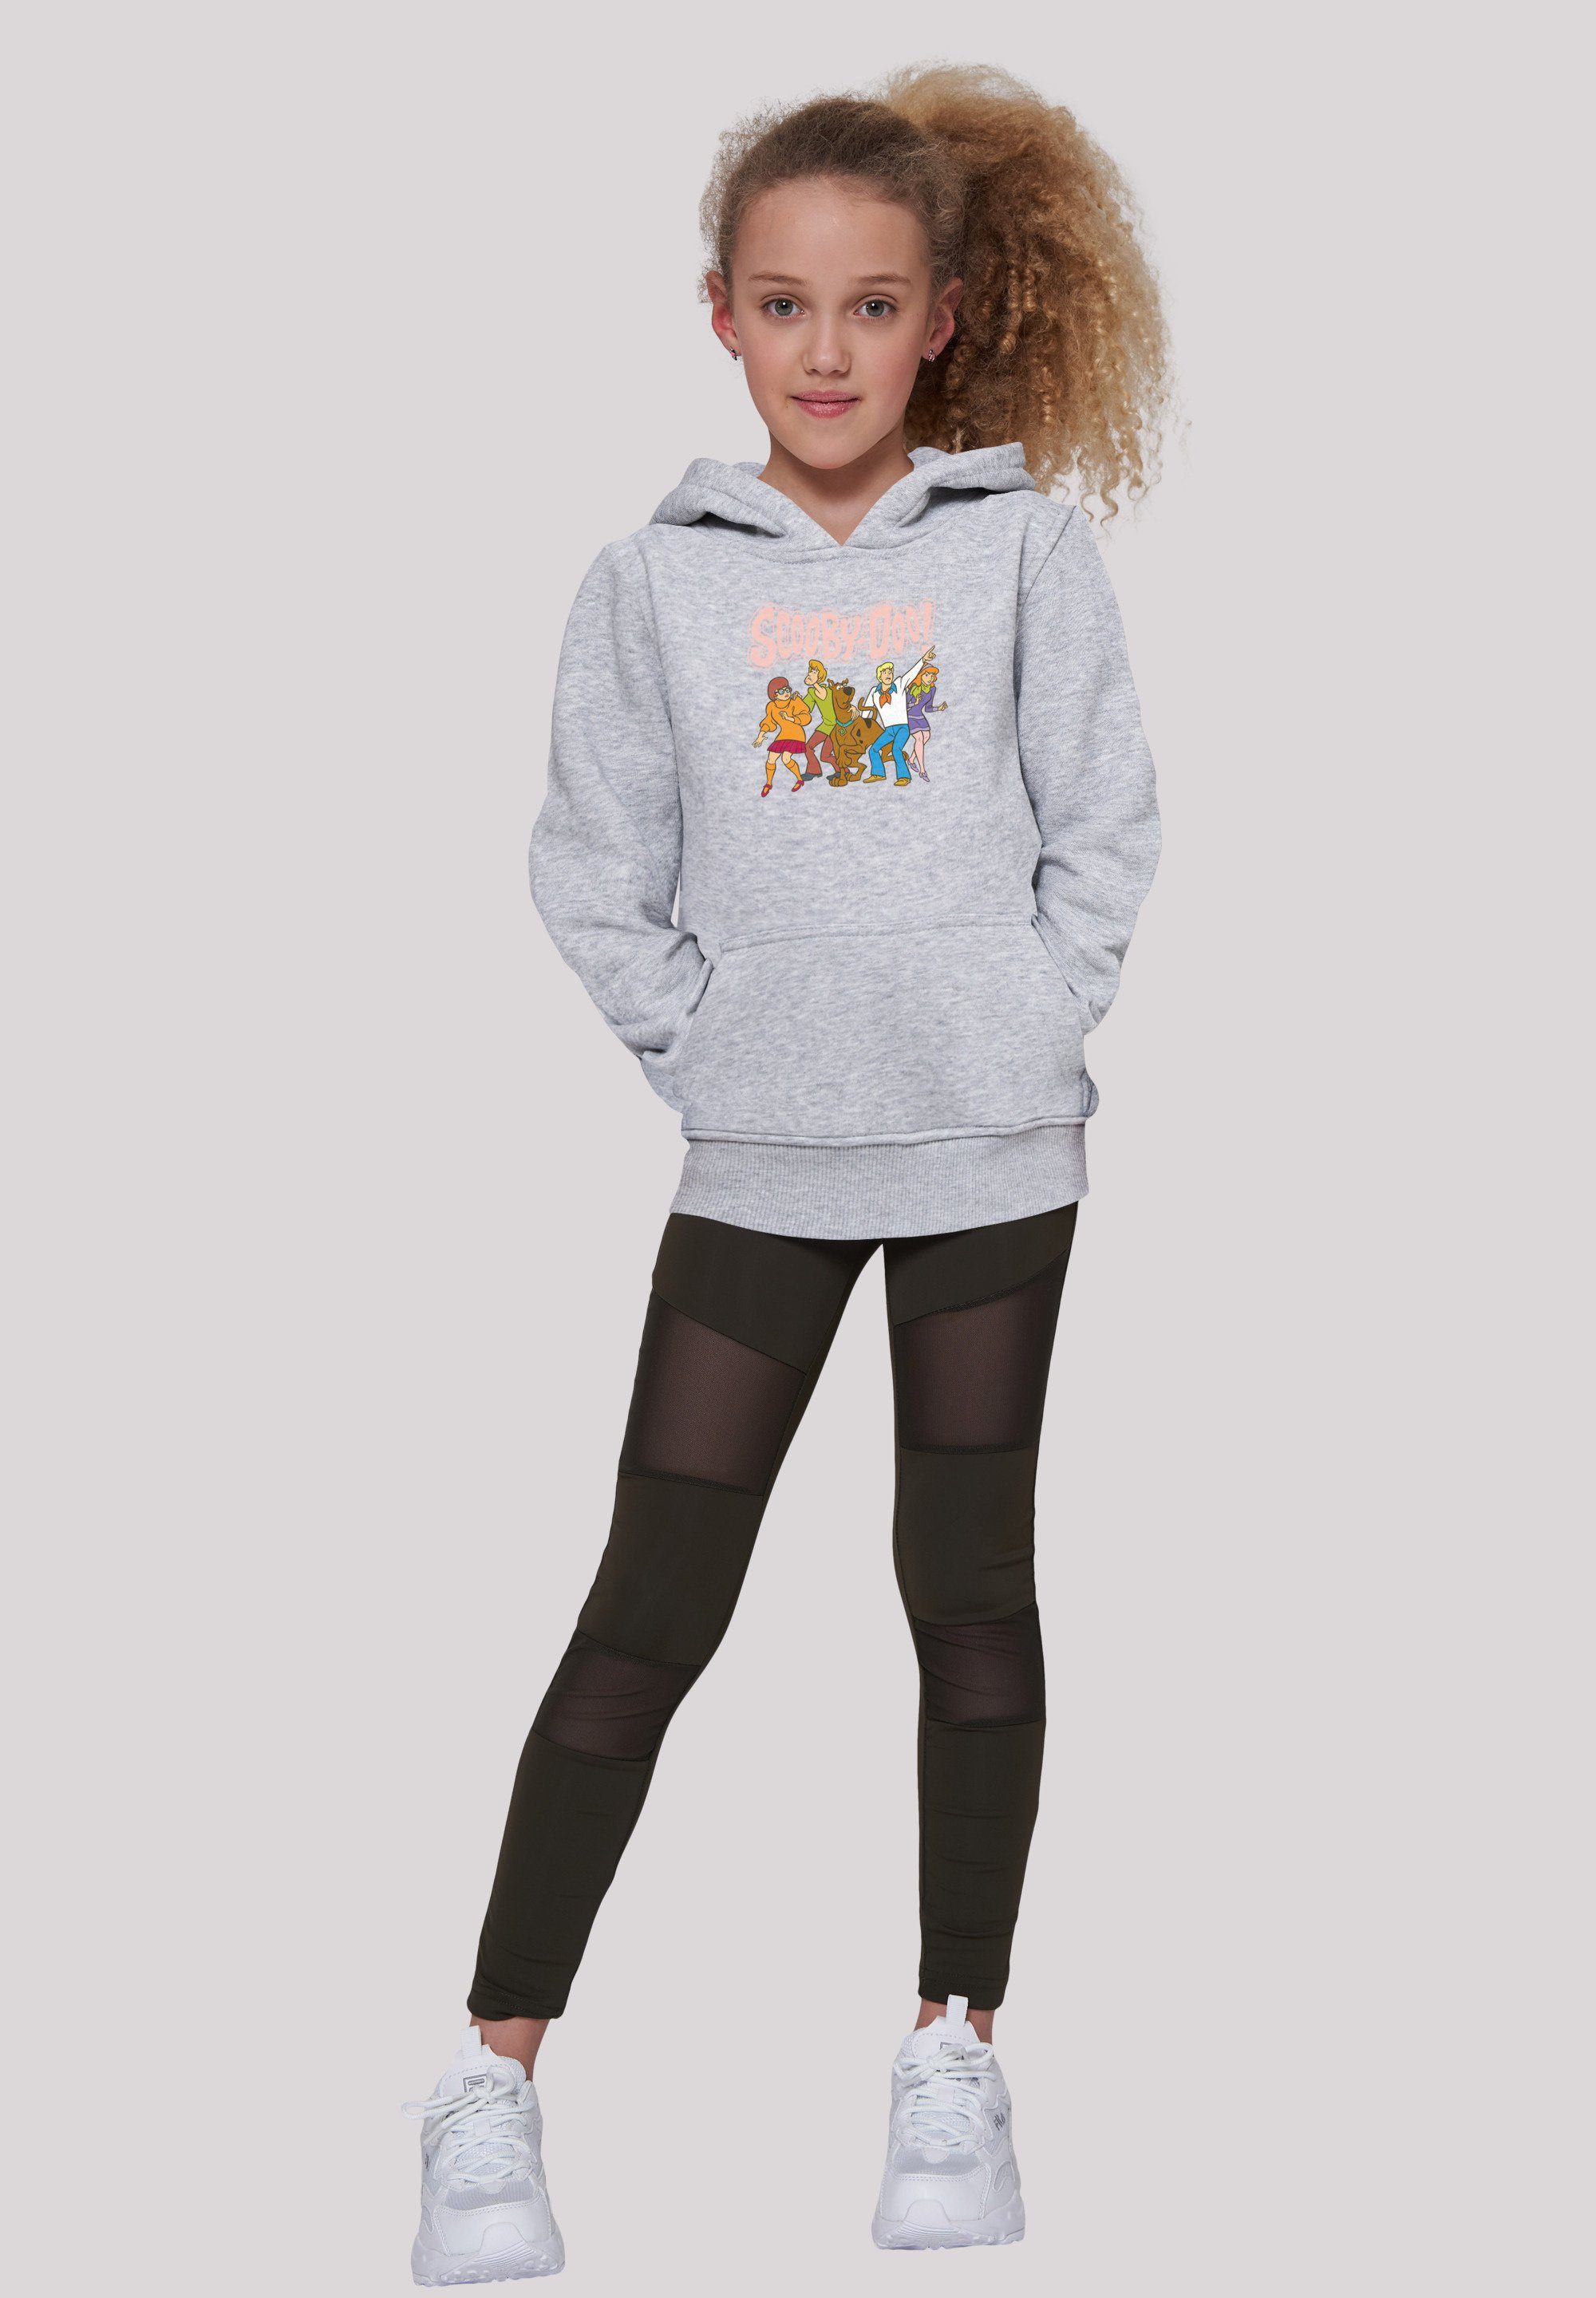 F4NT4STIC Classic Doo Scooby heather Group Sweatshirt grey Unisex Merch,Jungen,Mädchen,Bedruckt Kinder,Premium